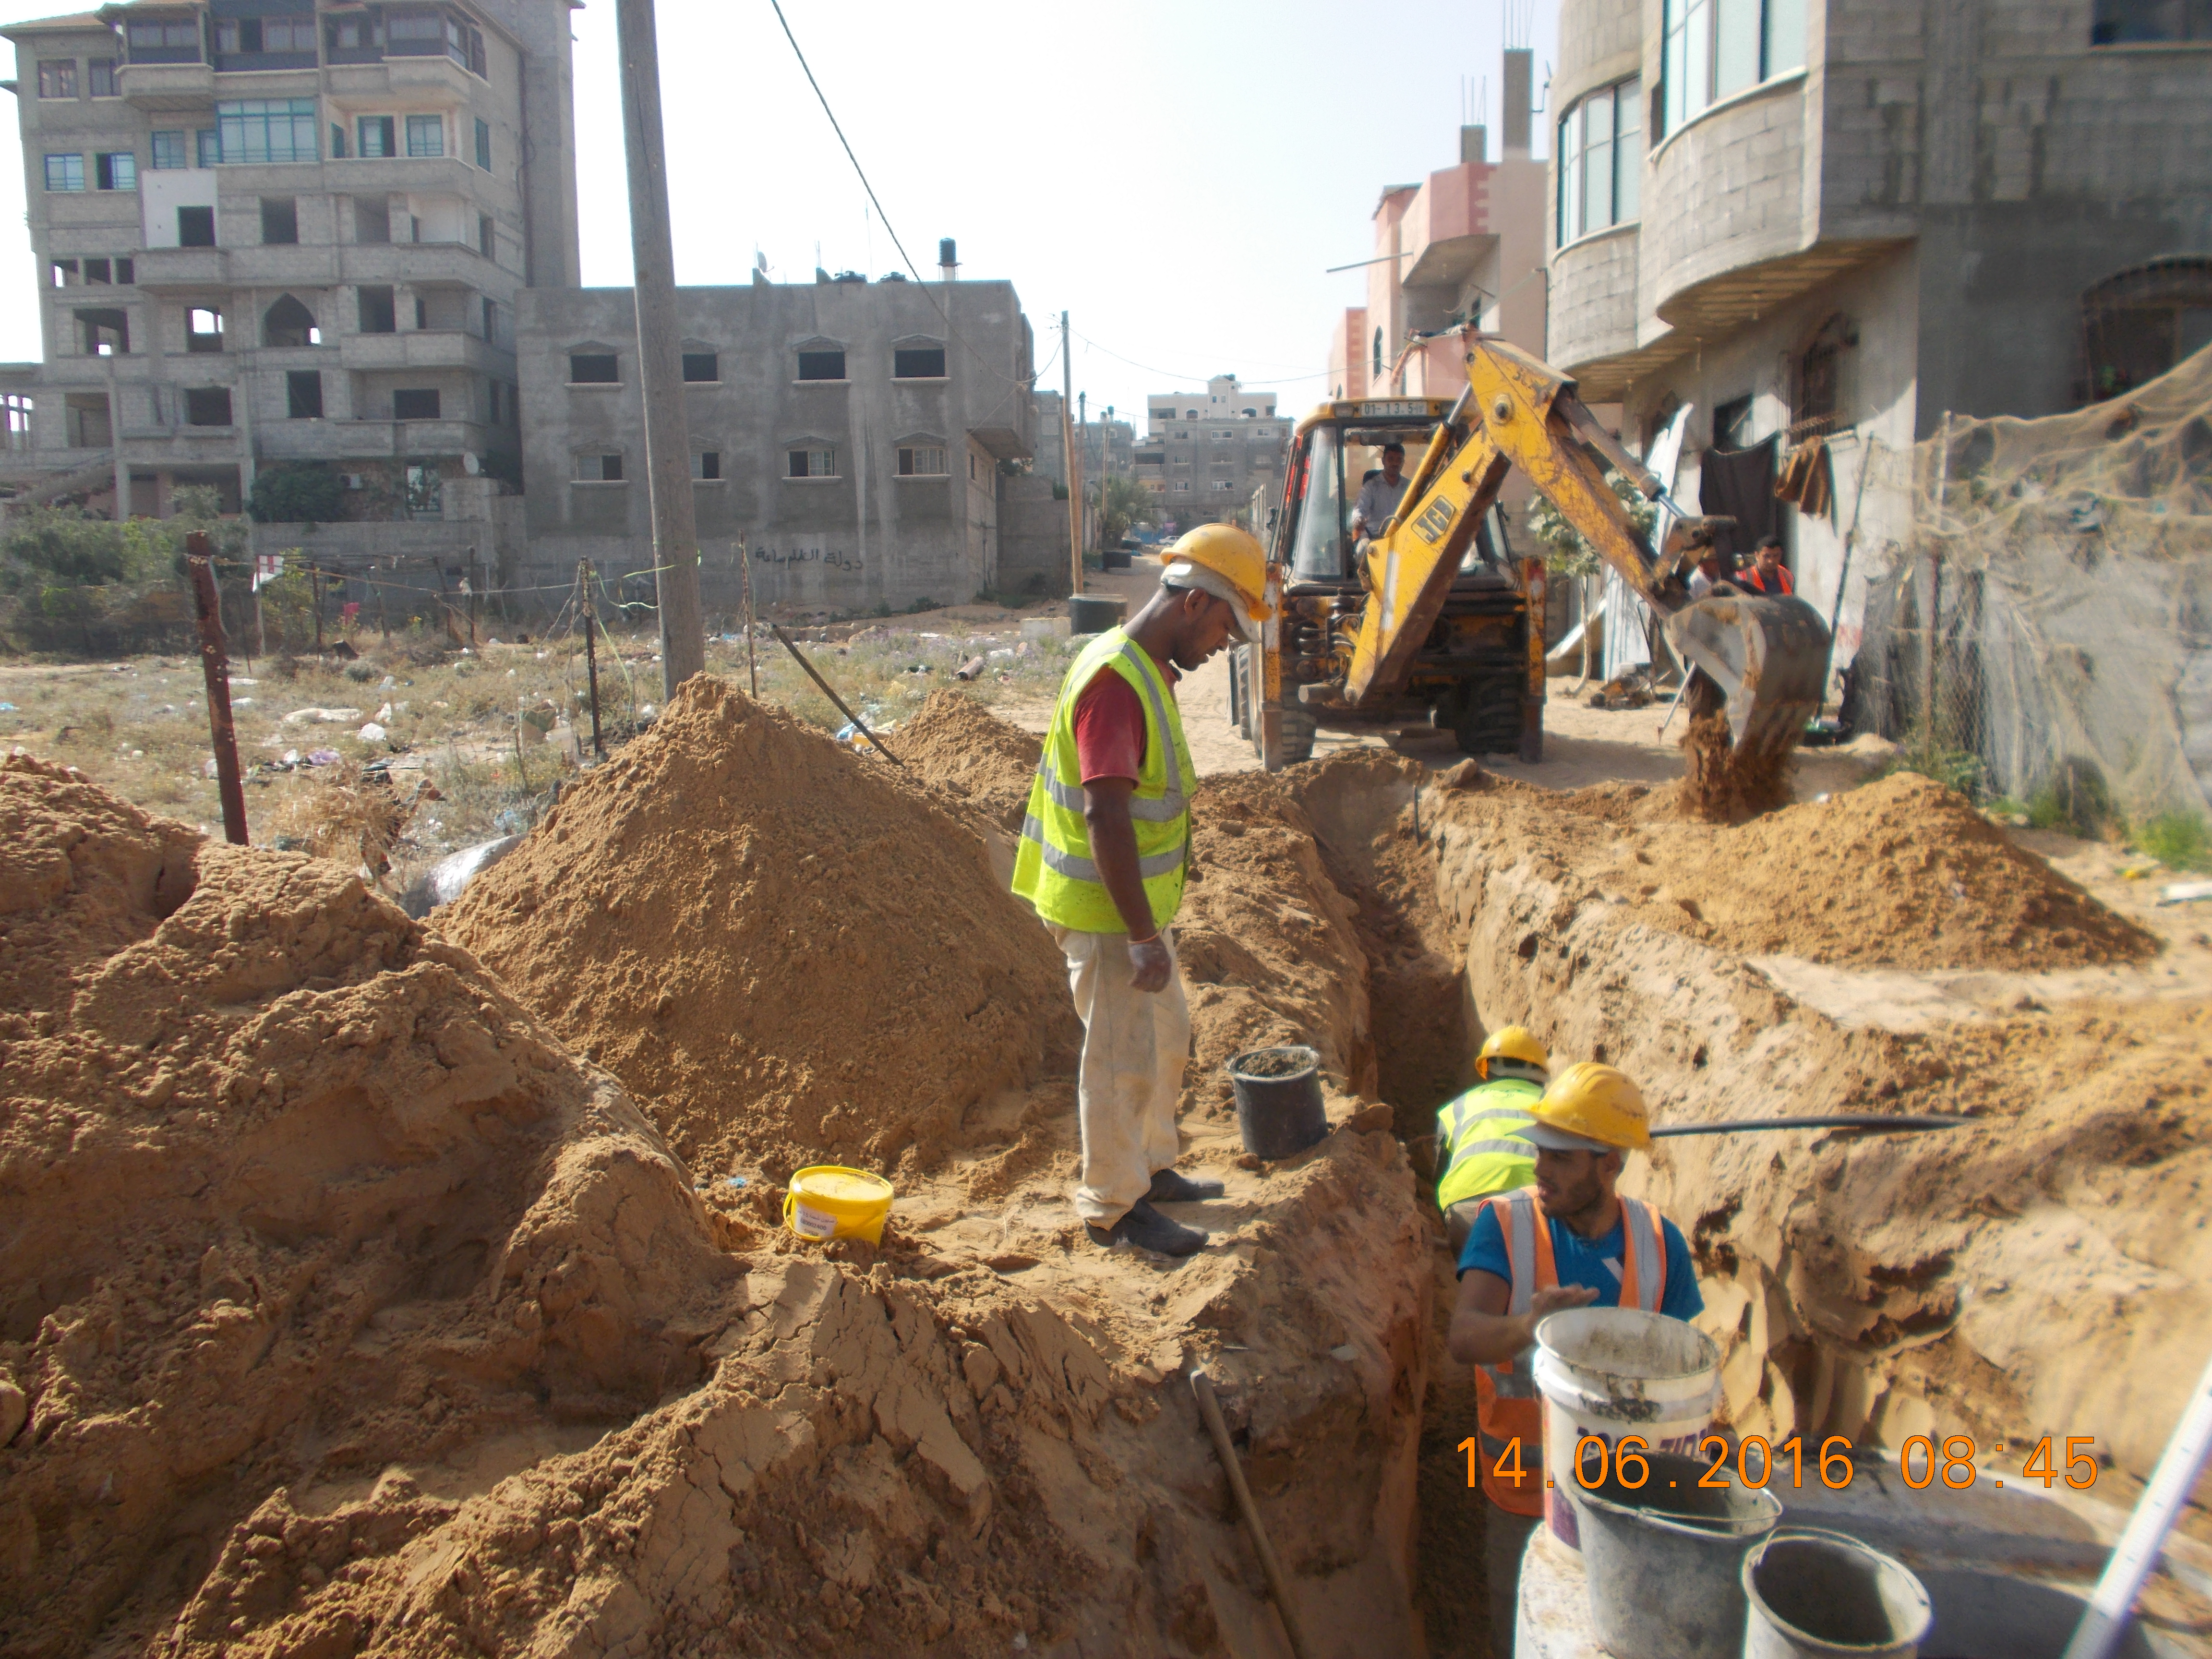 Waste Water Networks in Dair Al Balah and Jabalia